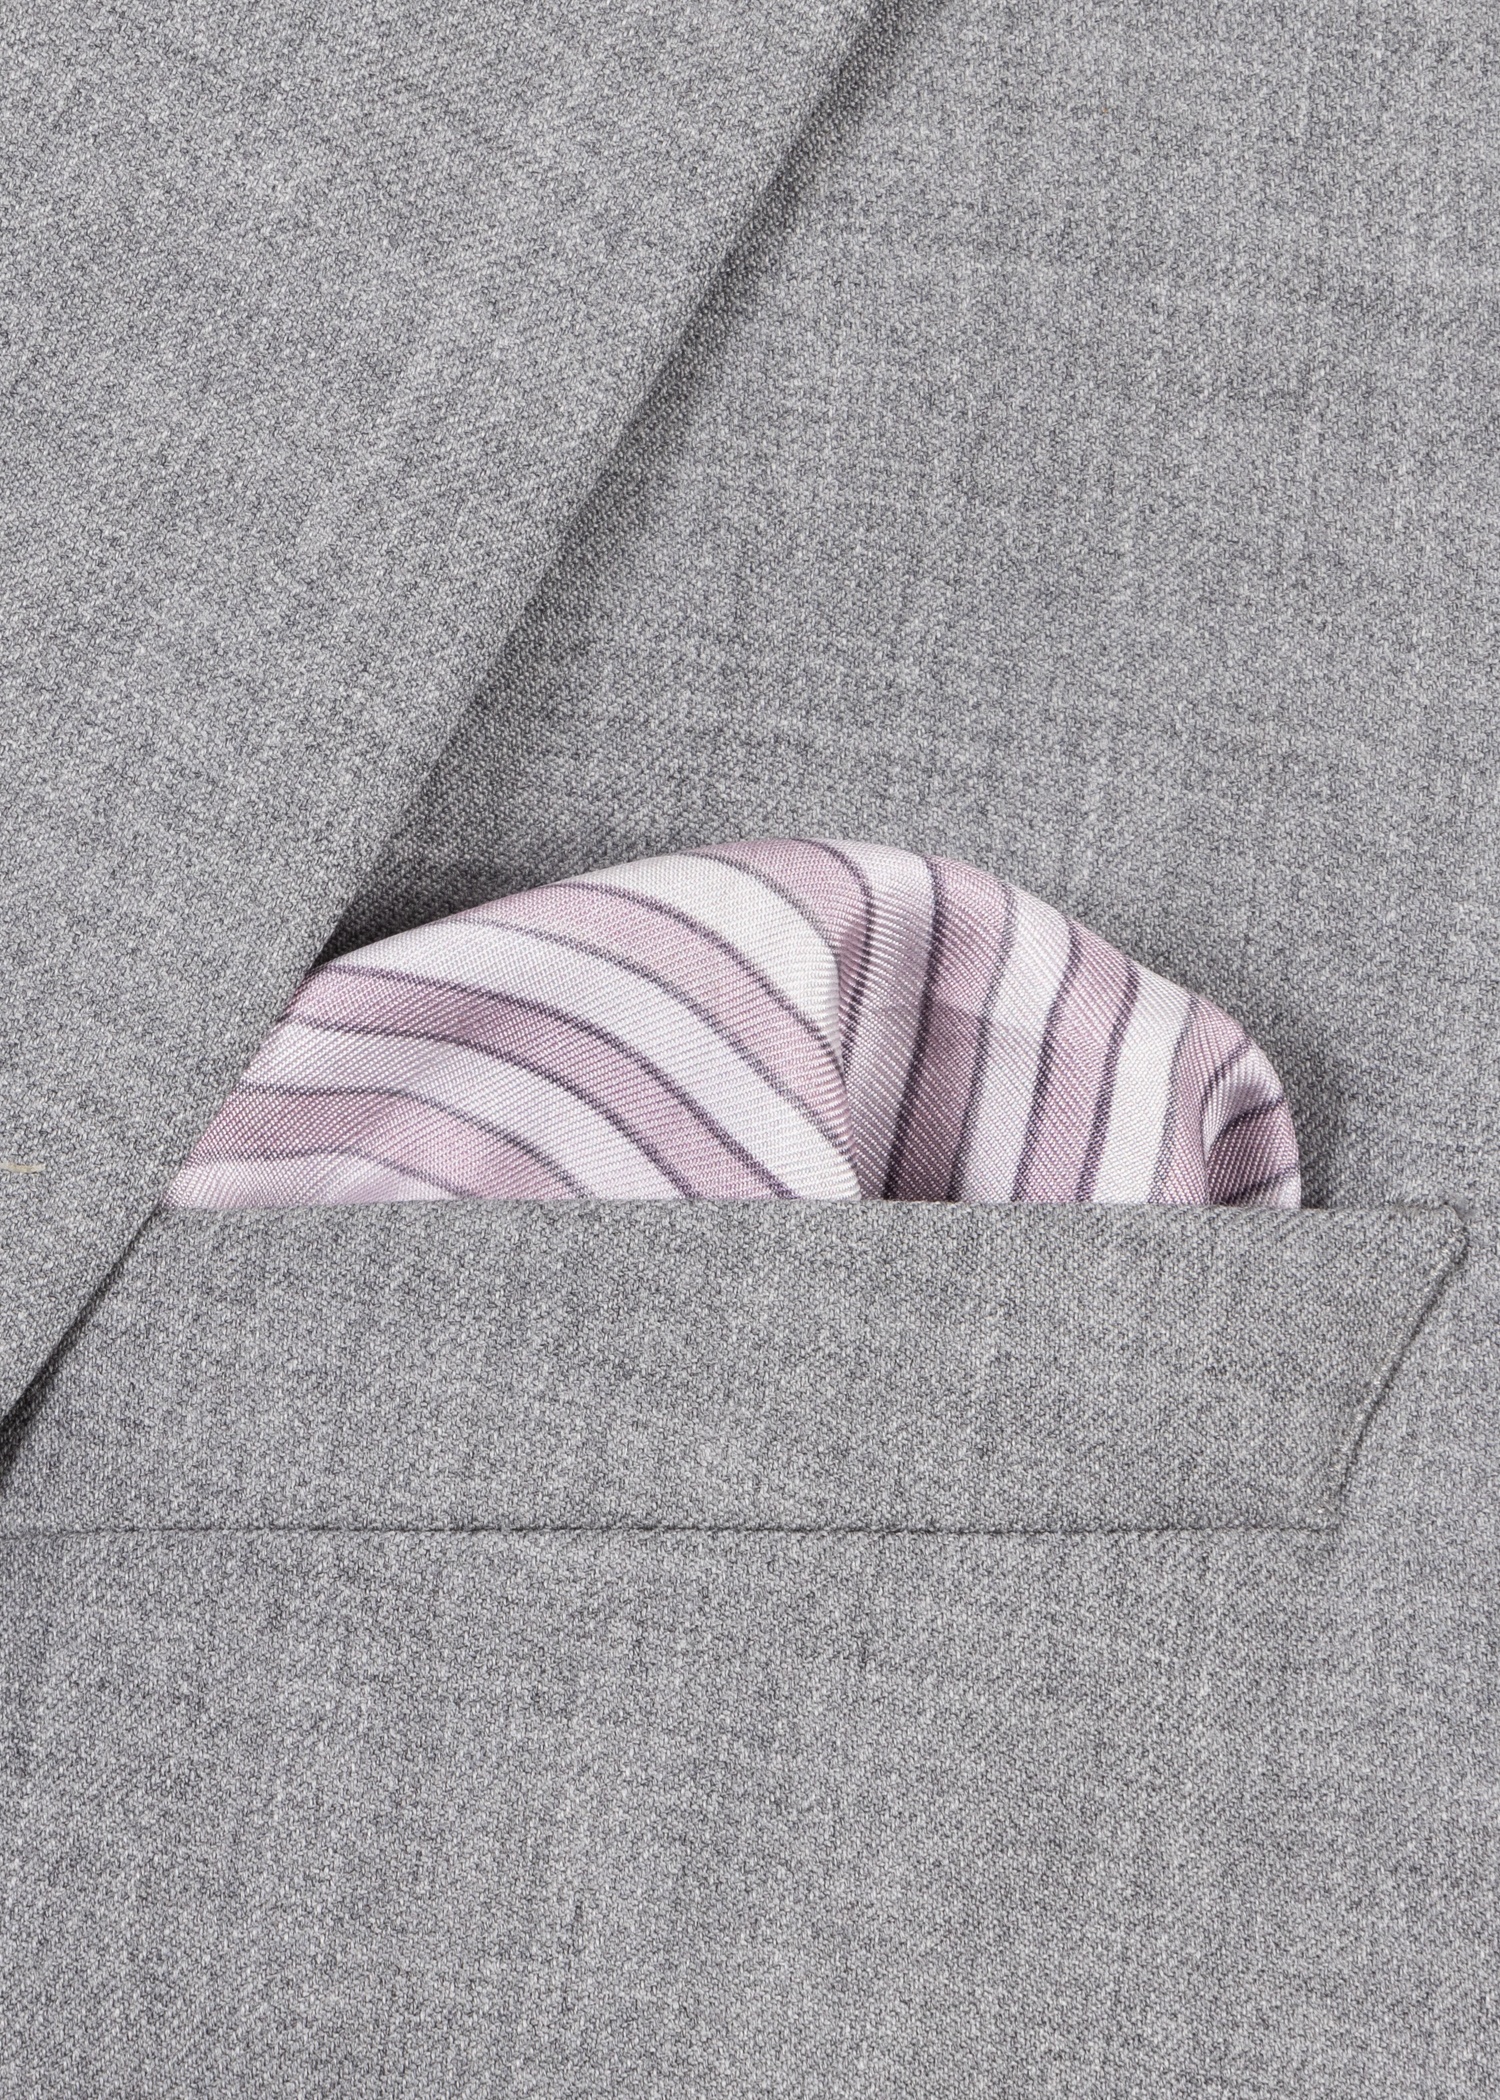 Pink and White Stripe Silk Pocket Square - 2